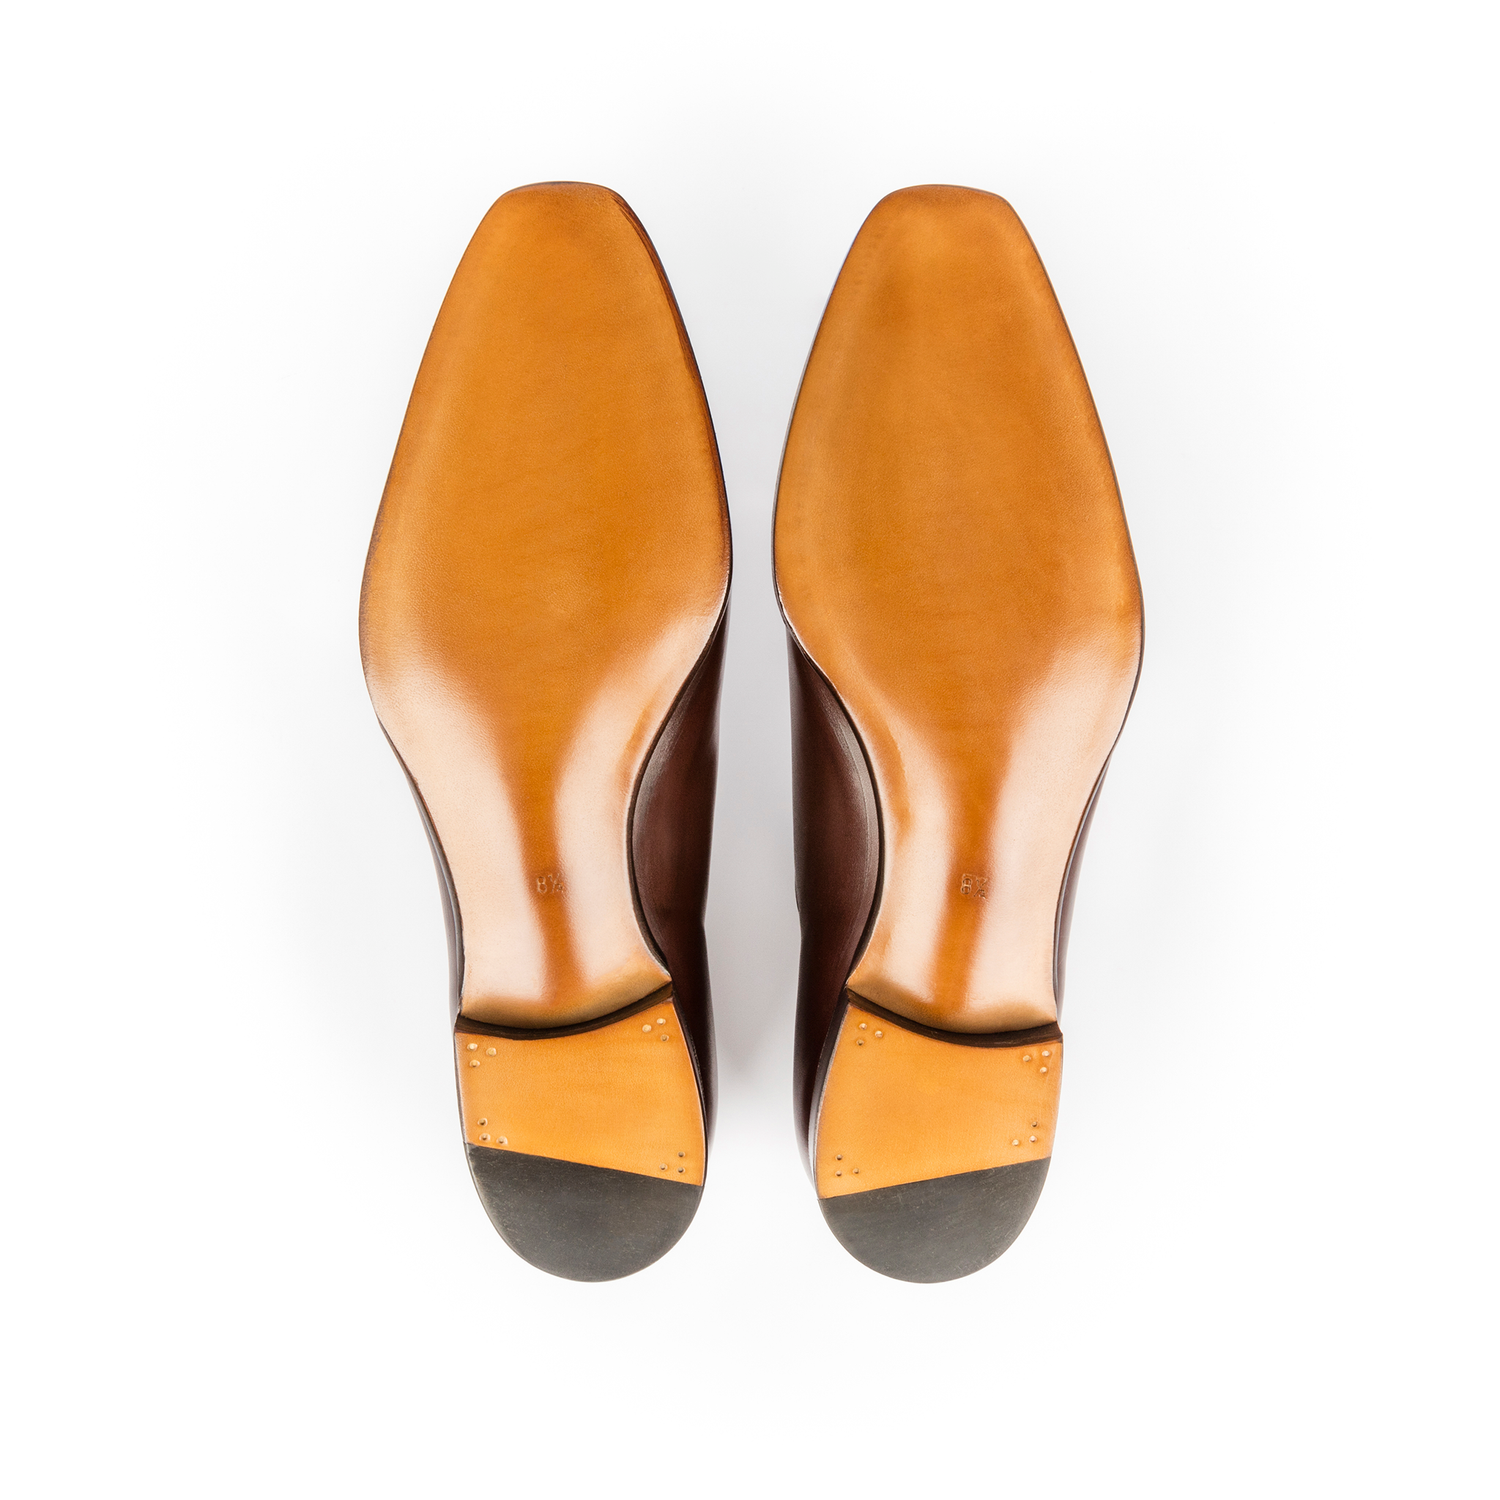 TLB Mallorca leather shoes 117 / GOYA / VEGANO DARK BROWN